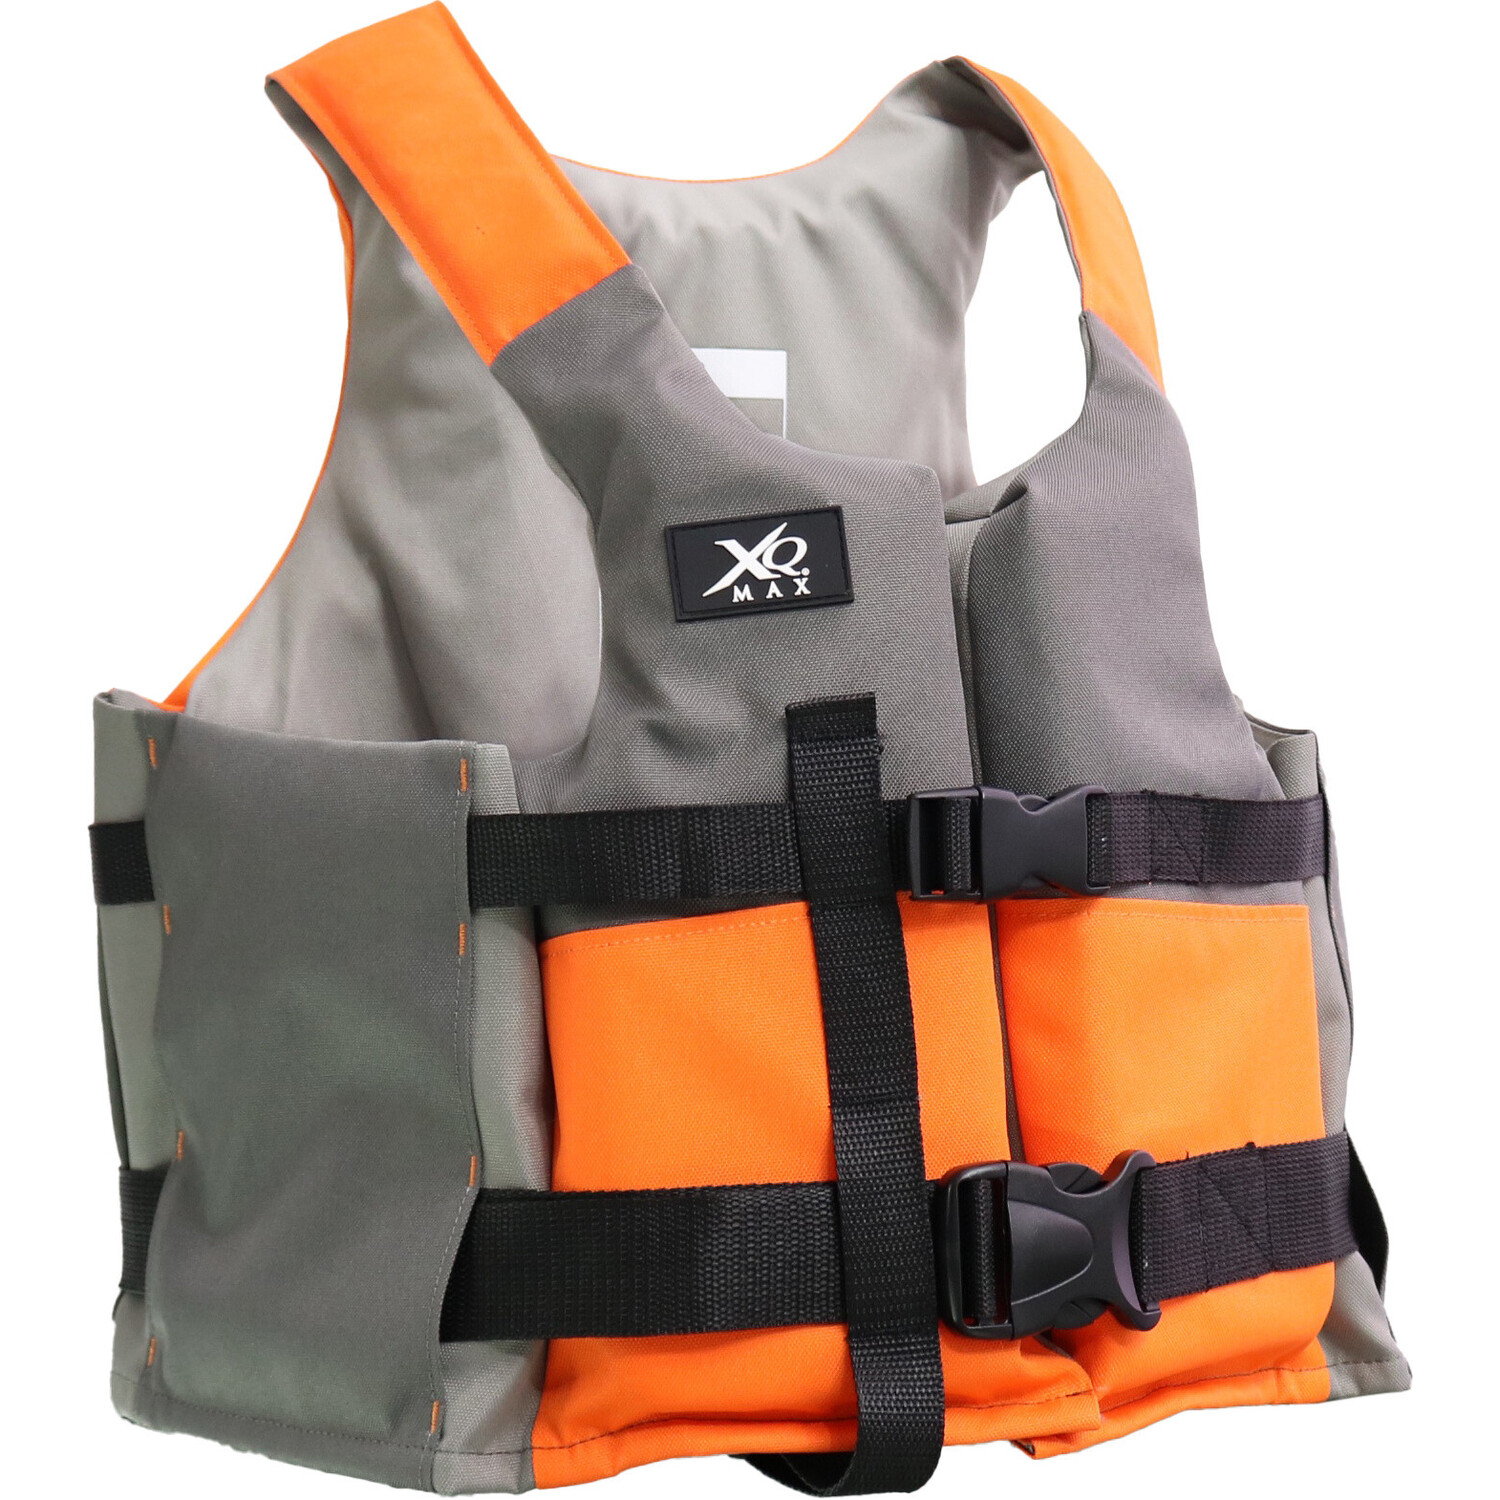 XQMAX Buoyancy Aid - Grey / Large Image